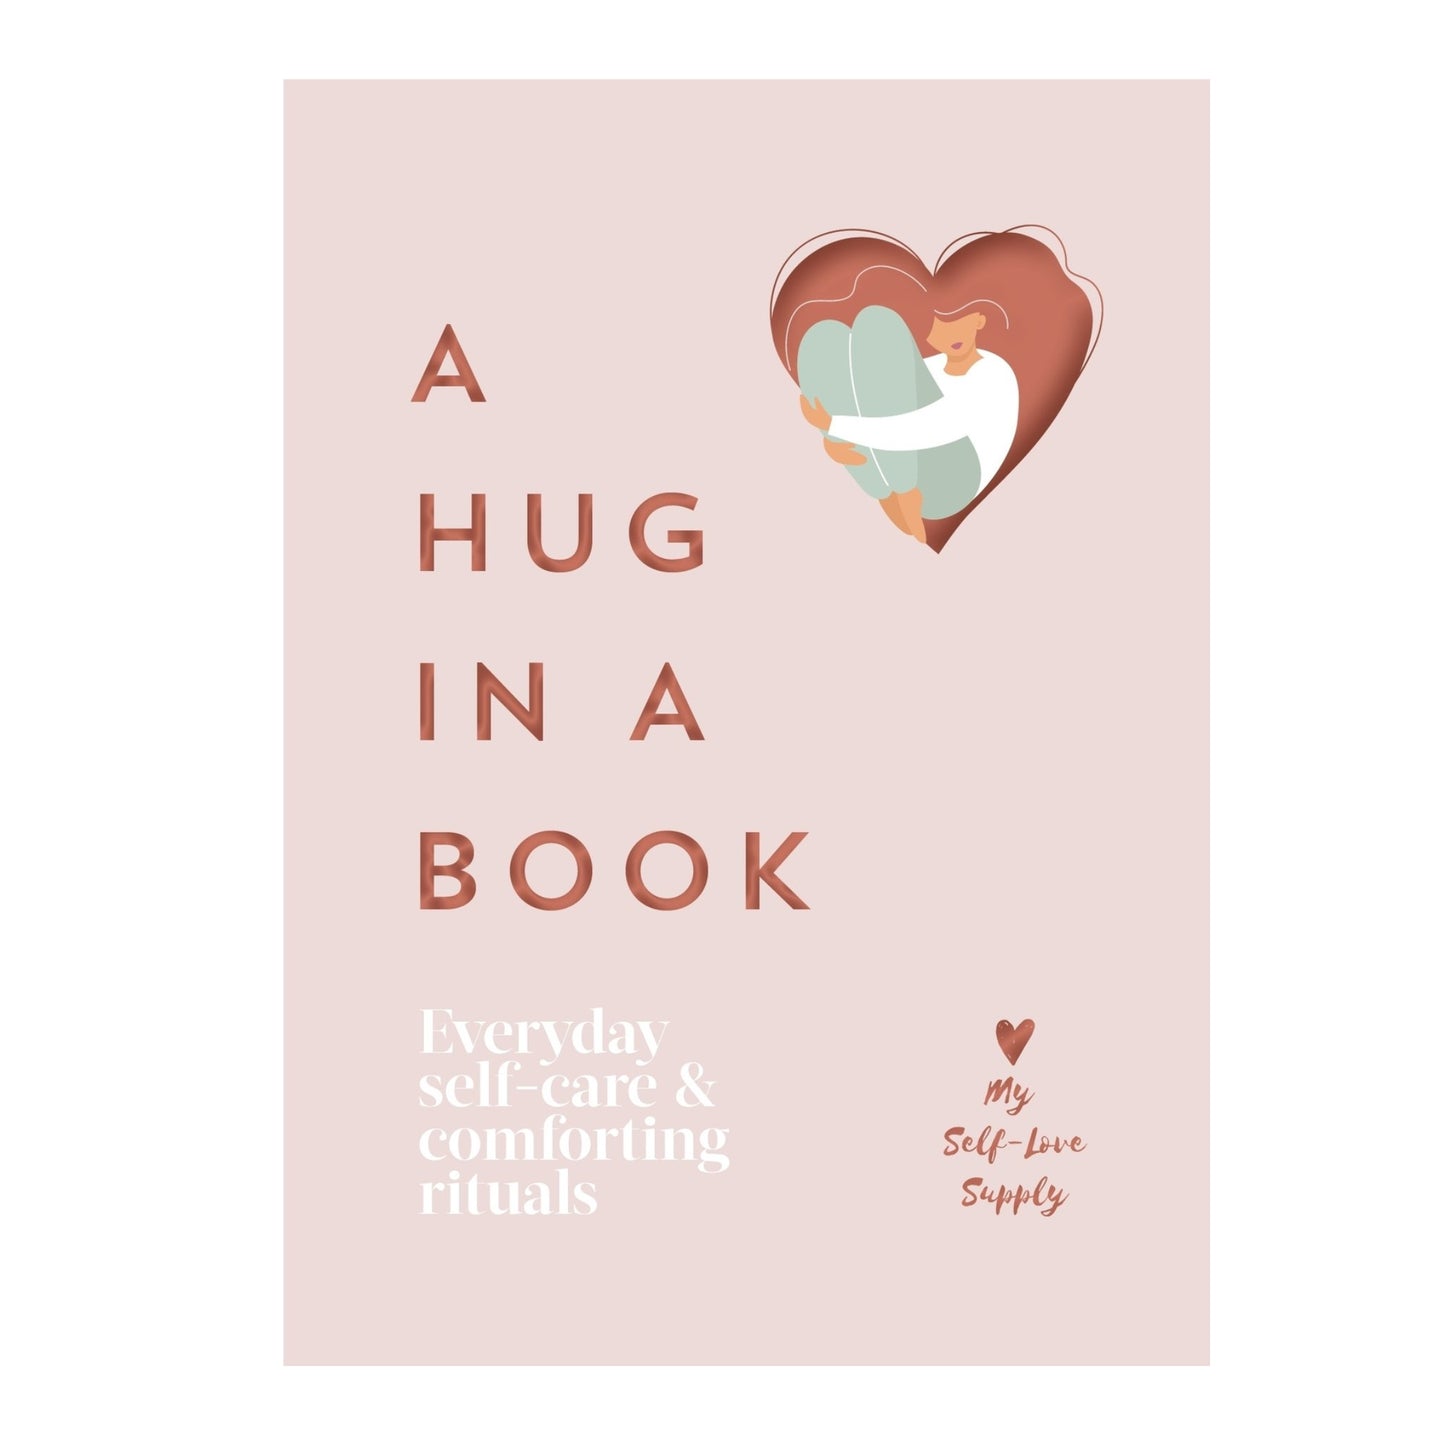 Hug in a Book - My Self-Love Supply - Astrology House